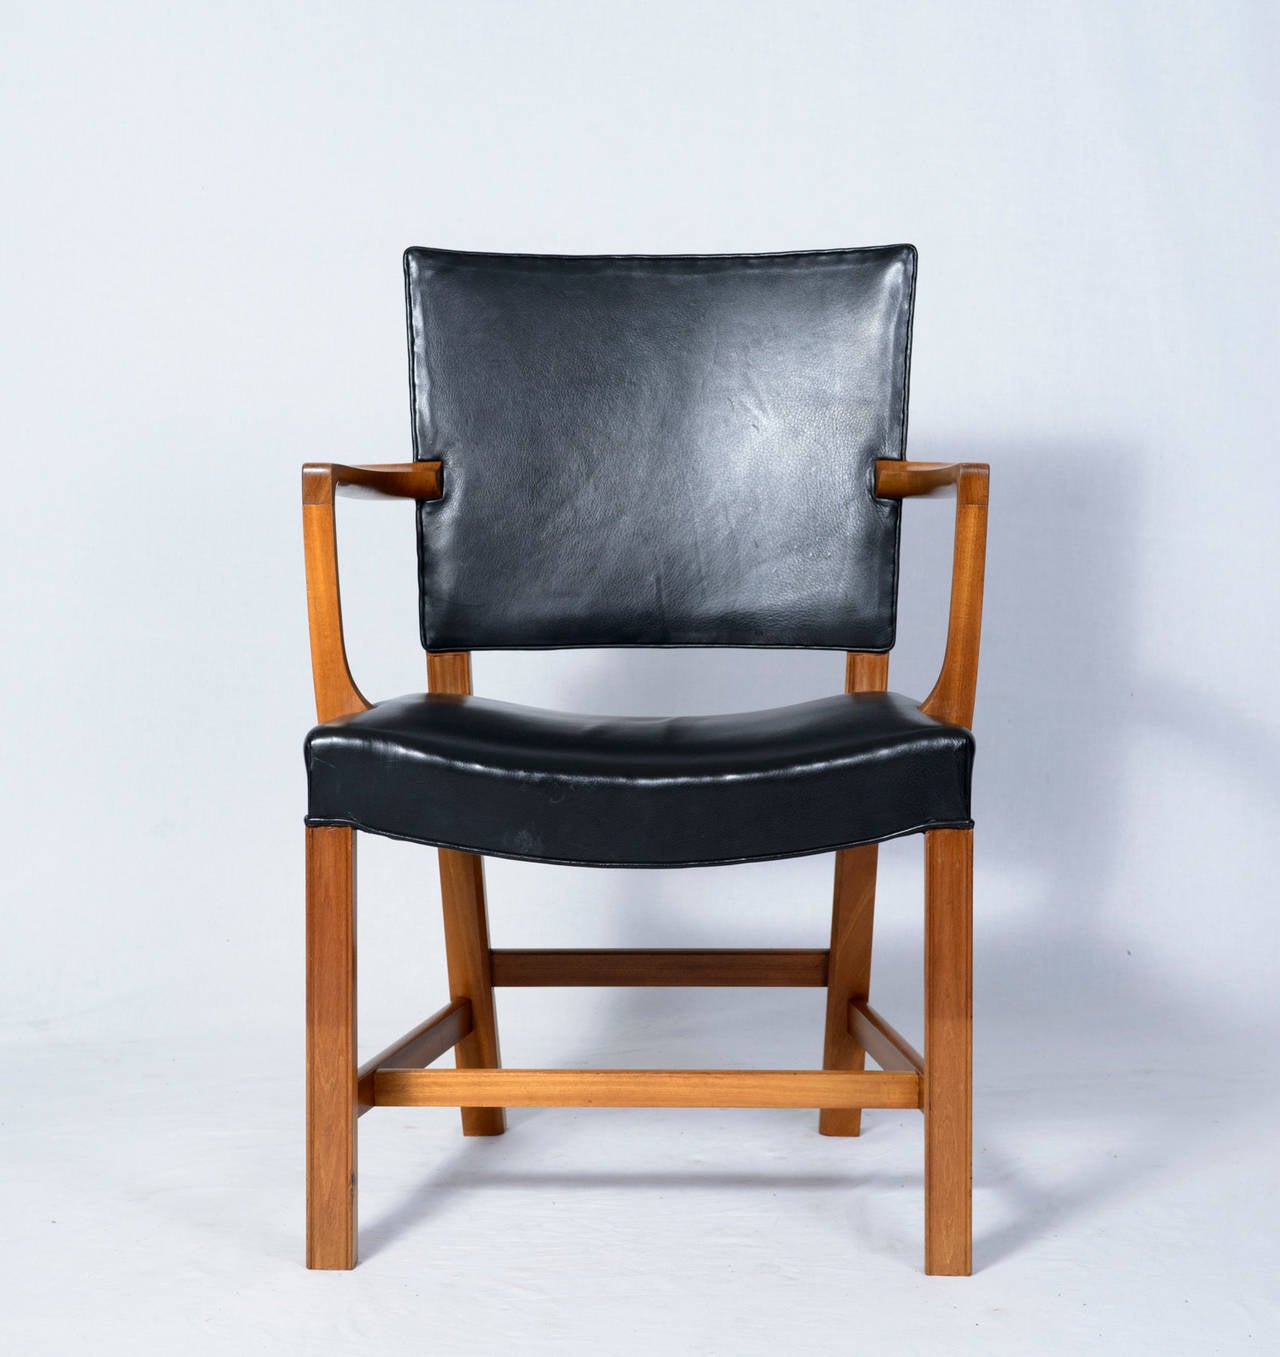 Kaare Klint armchair designed in 1927 and produced by Rud Rasmussen.